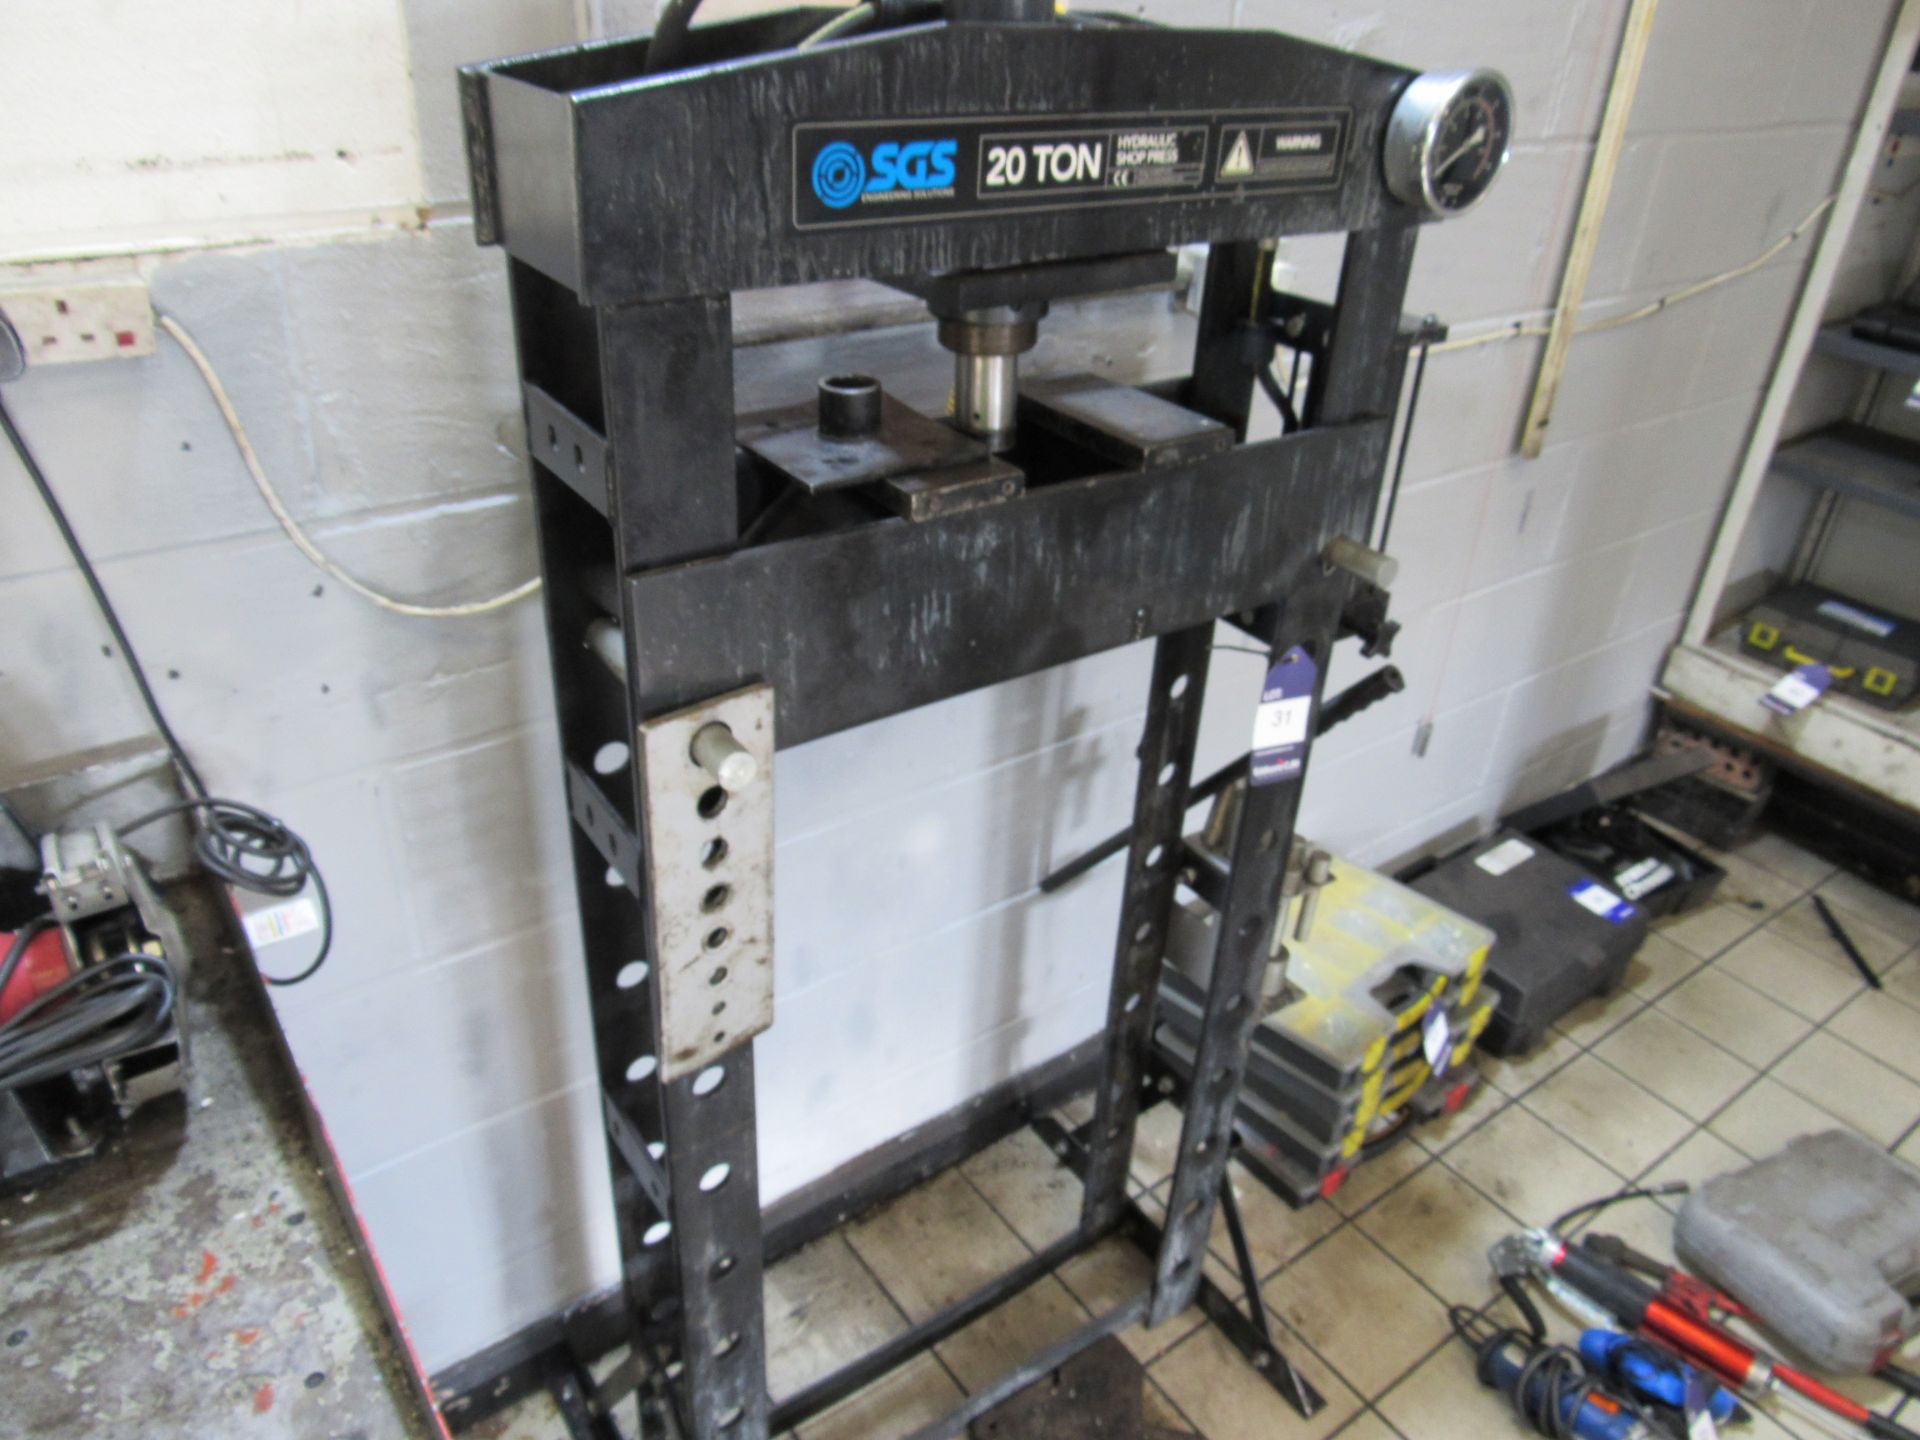 SG5 20Ton Hydraulic shop Press - Image 2 of 4